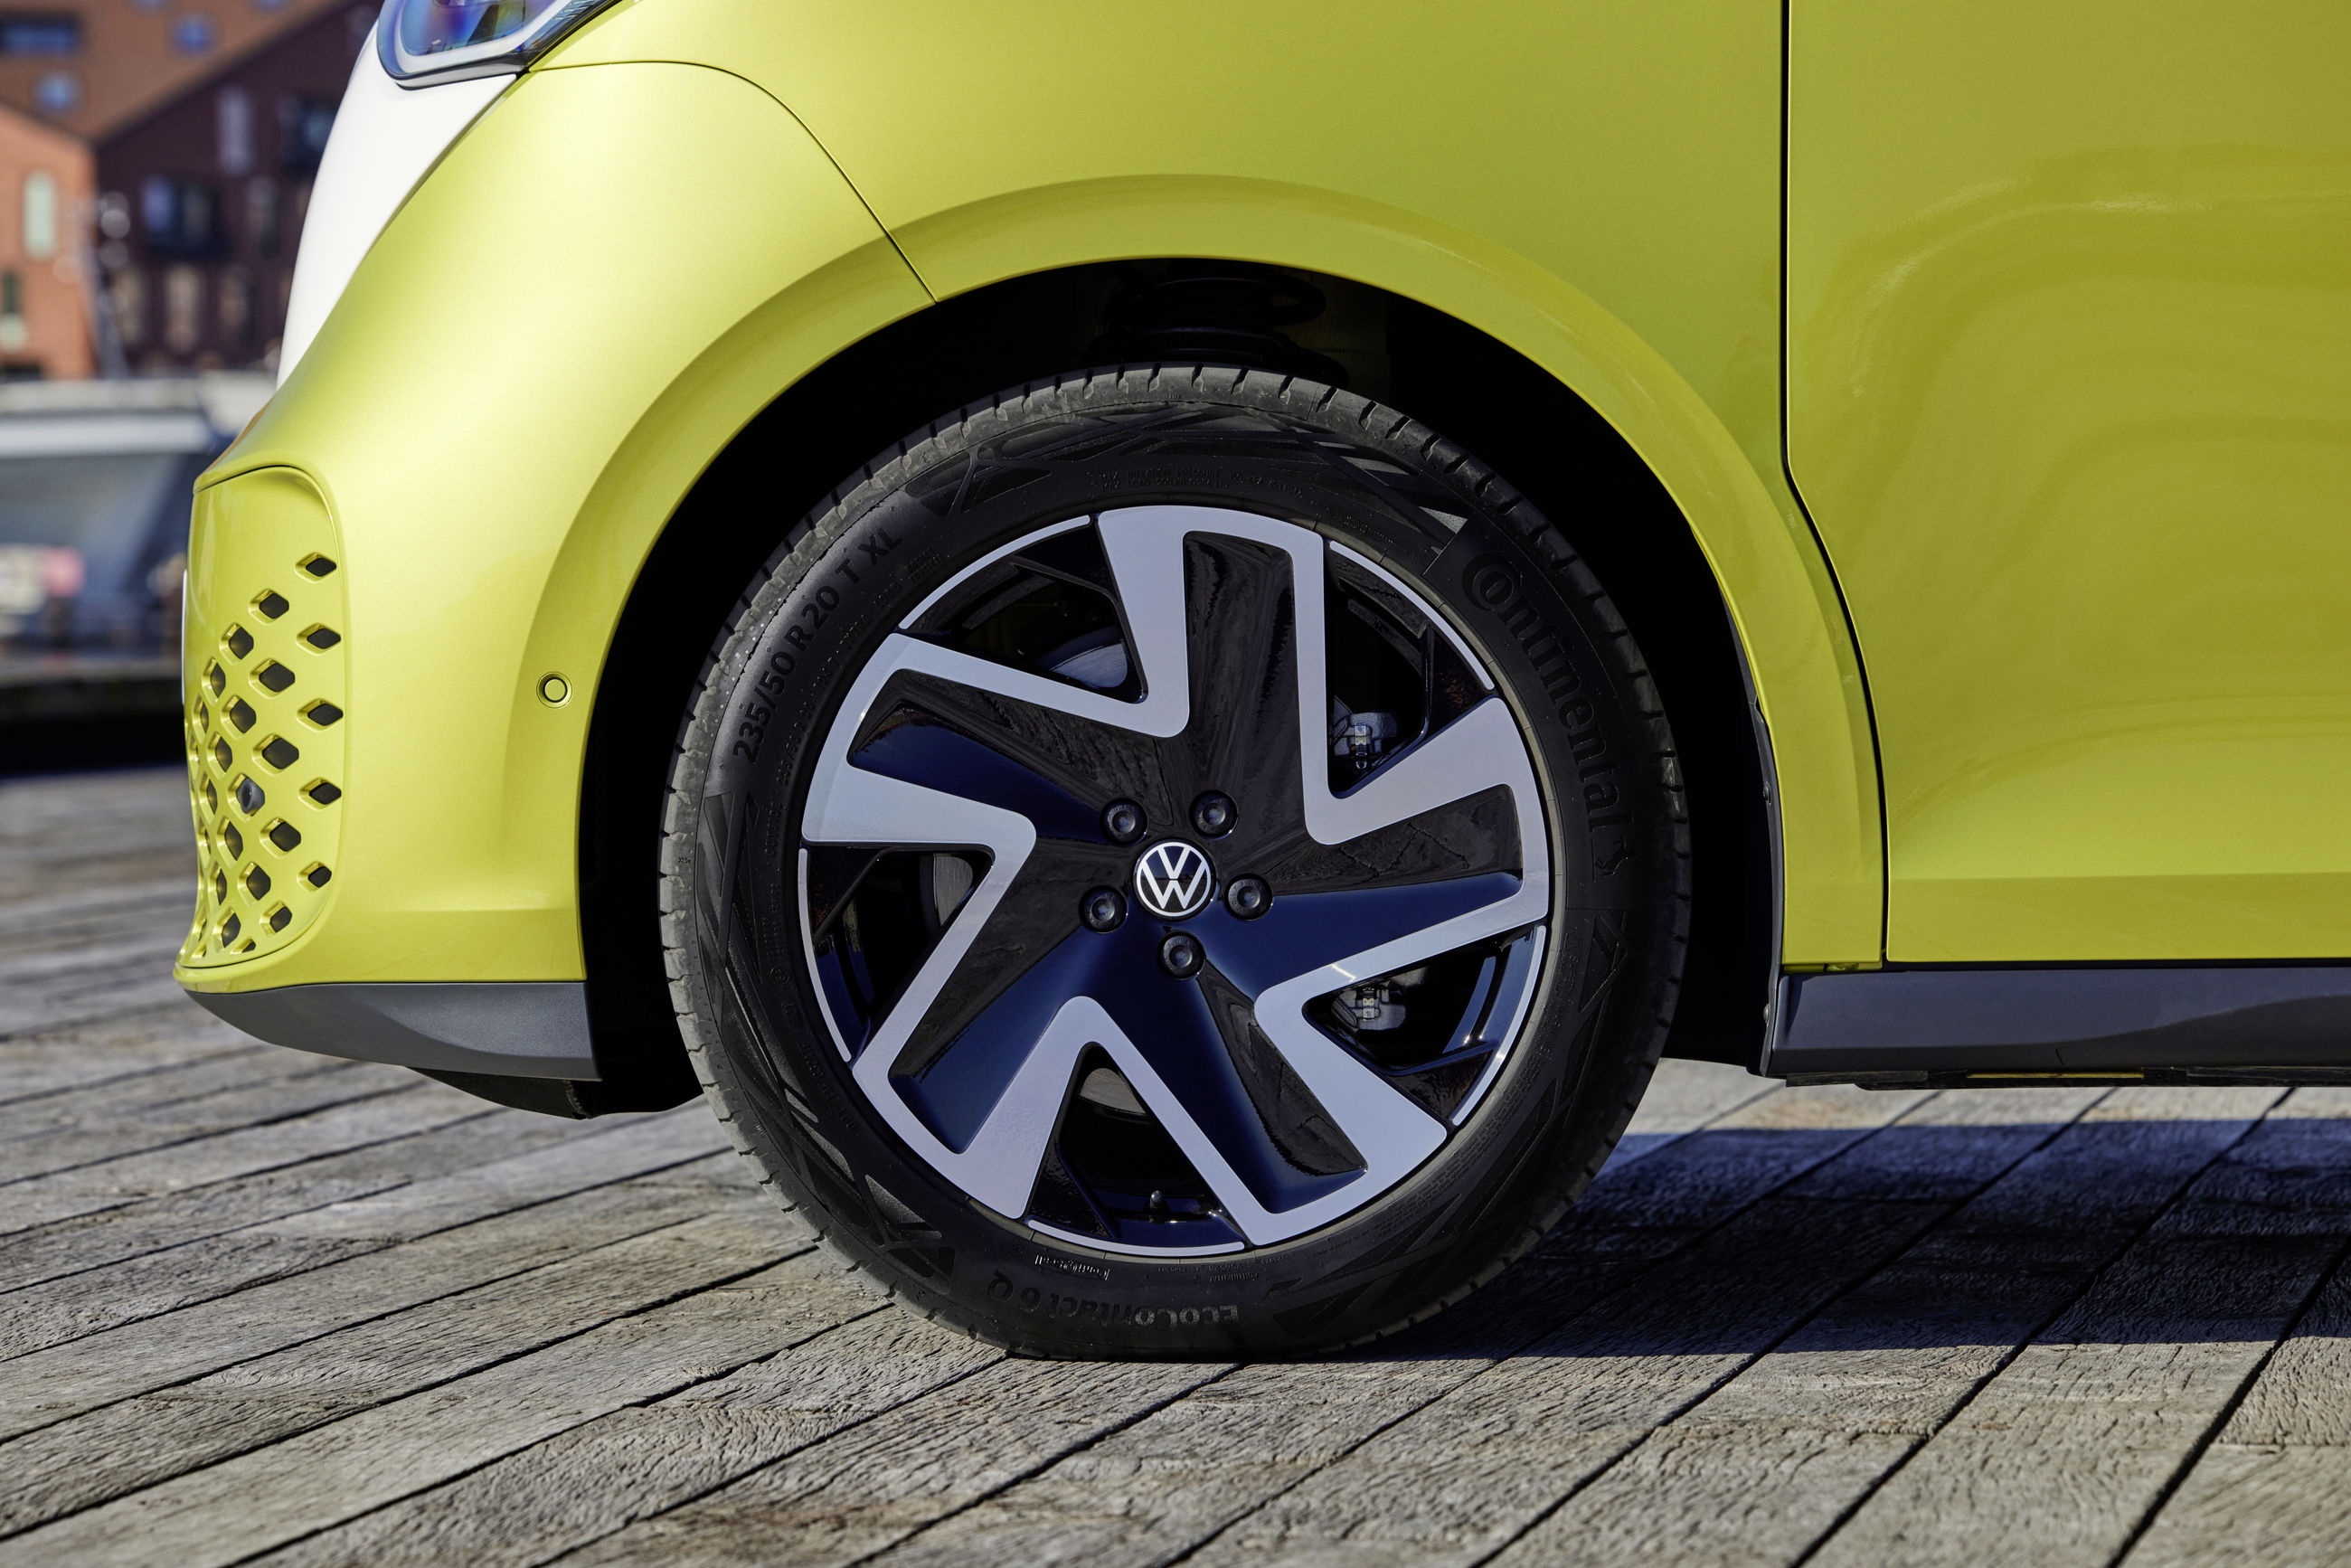 How to Reset Tire Pressure Light on Volkswagen Vehicles